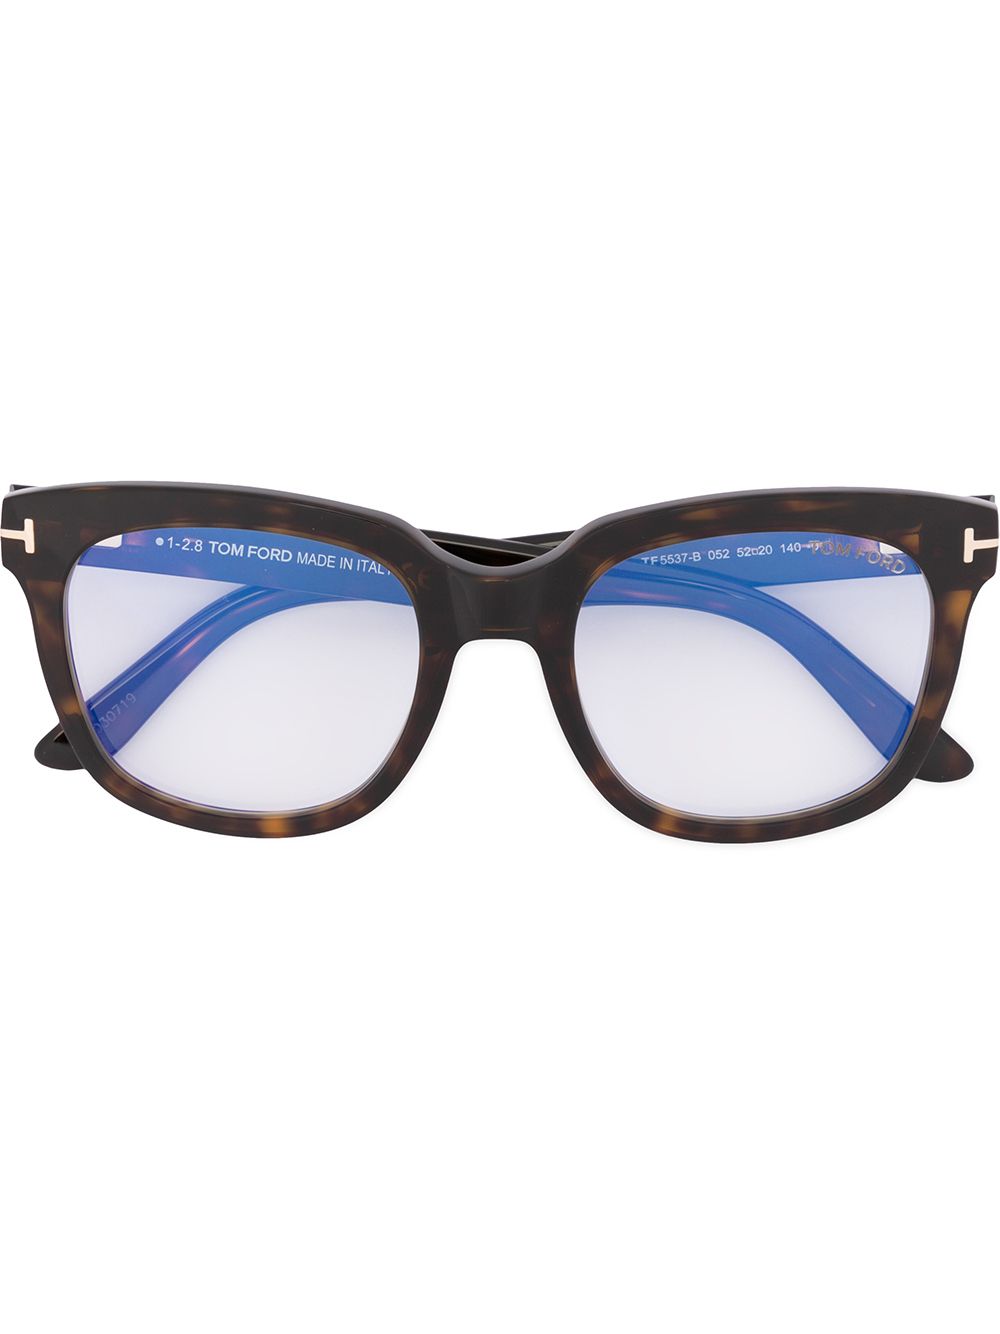 TOM FORD Eyewear tortoise shell square sunglasses - Brown von TOM FORD Eyewear